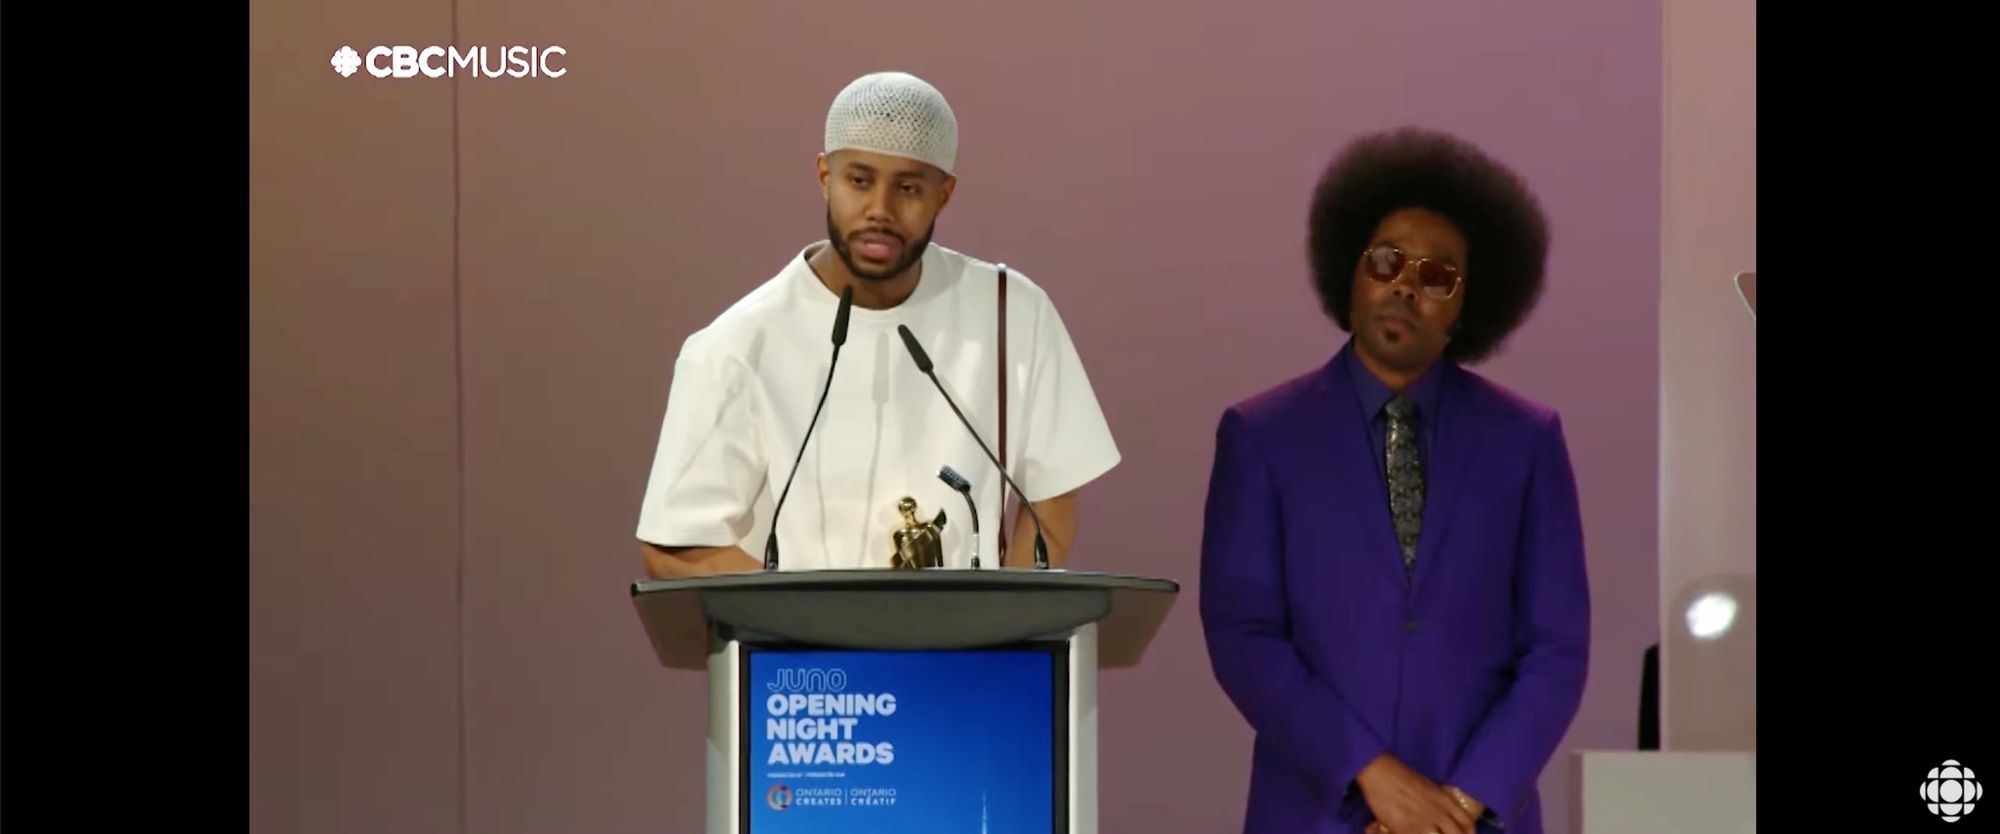 Mustafa wins alternative album of the year at Juno Awards 2022